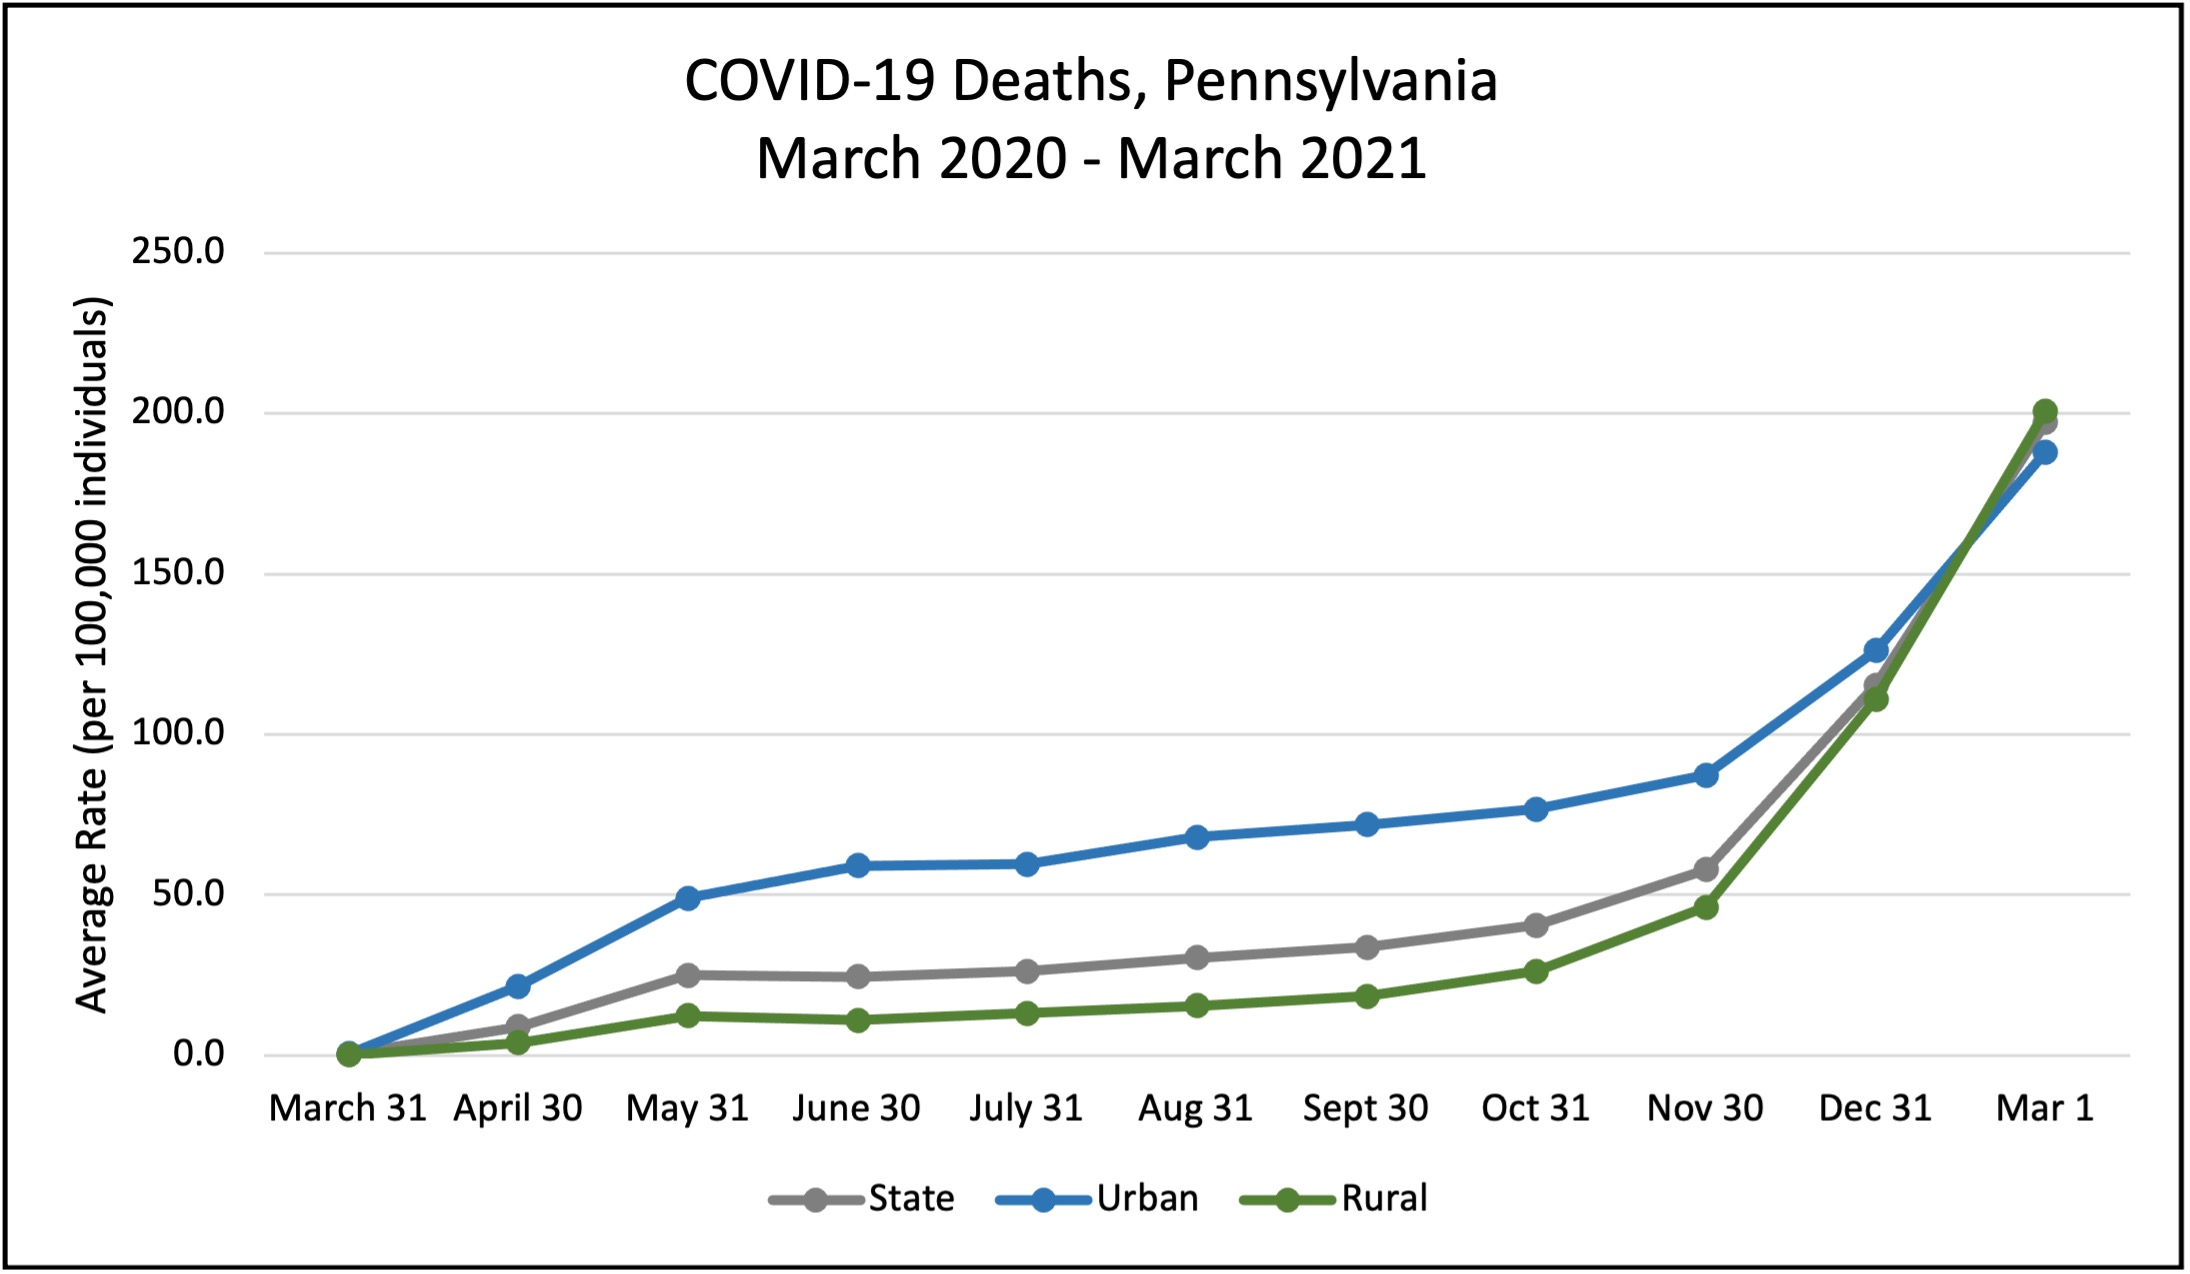 COVID-19 Deaths, Pennsylvania March 2020 - March 2021